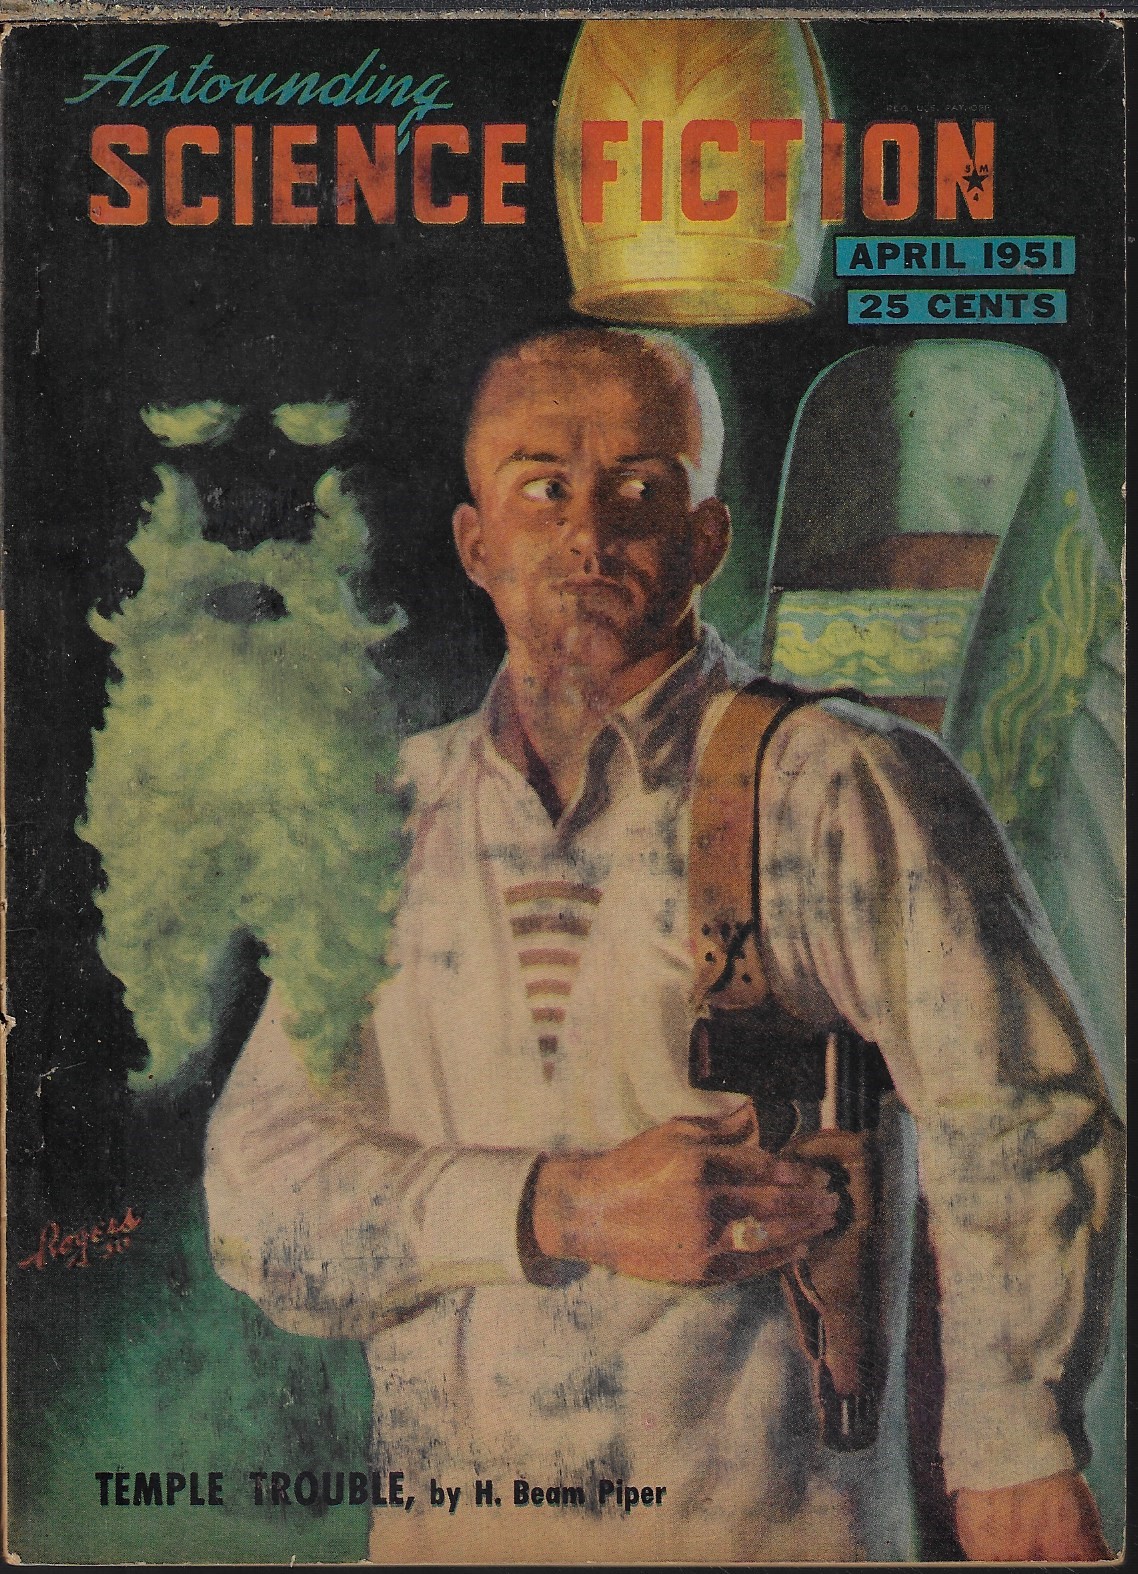 ASTOUNDING (H. BEAM PIPER; SYLVIA JACOBS; JACK WILLIAMSON; FREDRIC BROWN; OLIVER SAARI; RAYMOND Z. GALLUN; MILTON A. ROTHMAN; R. S. RICHARDSON) - Astounding Science Fiction: April, Apr. 1951